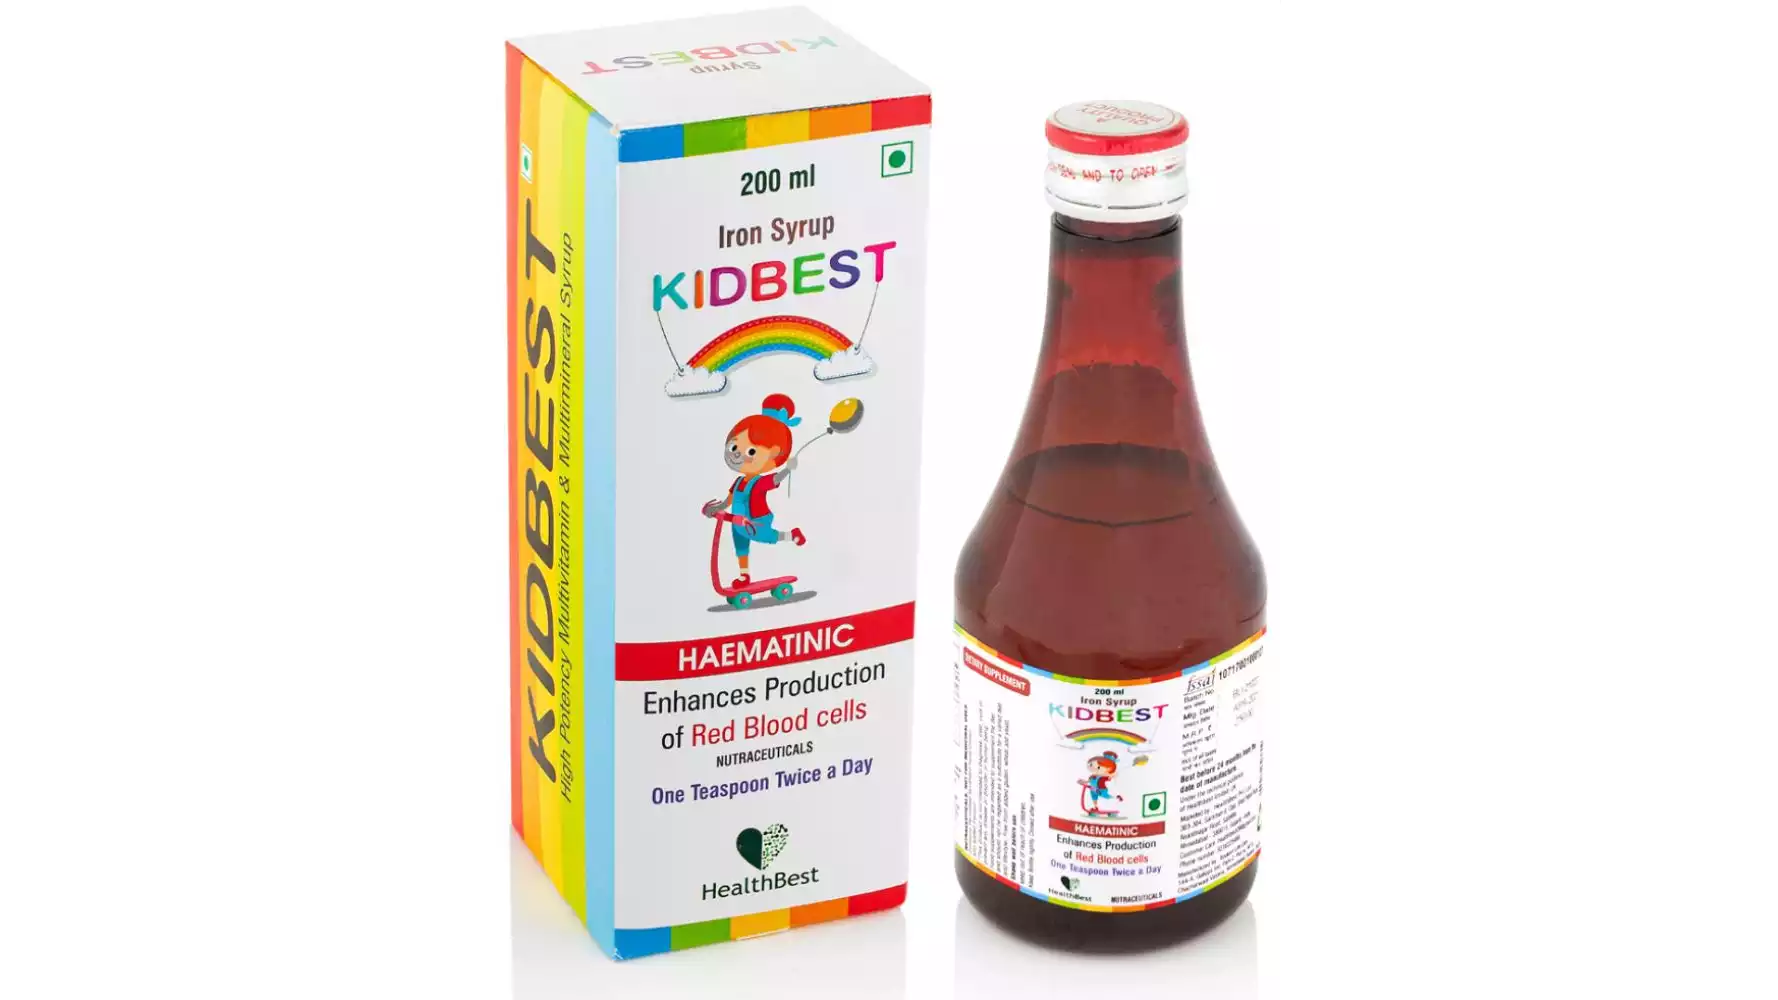 HealthBest Kidbest Haematinic Iron Syrup (200ml)